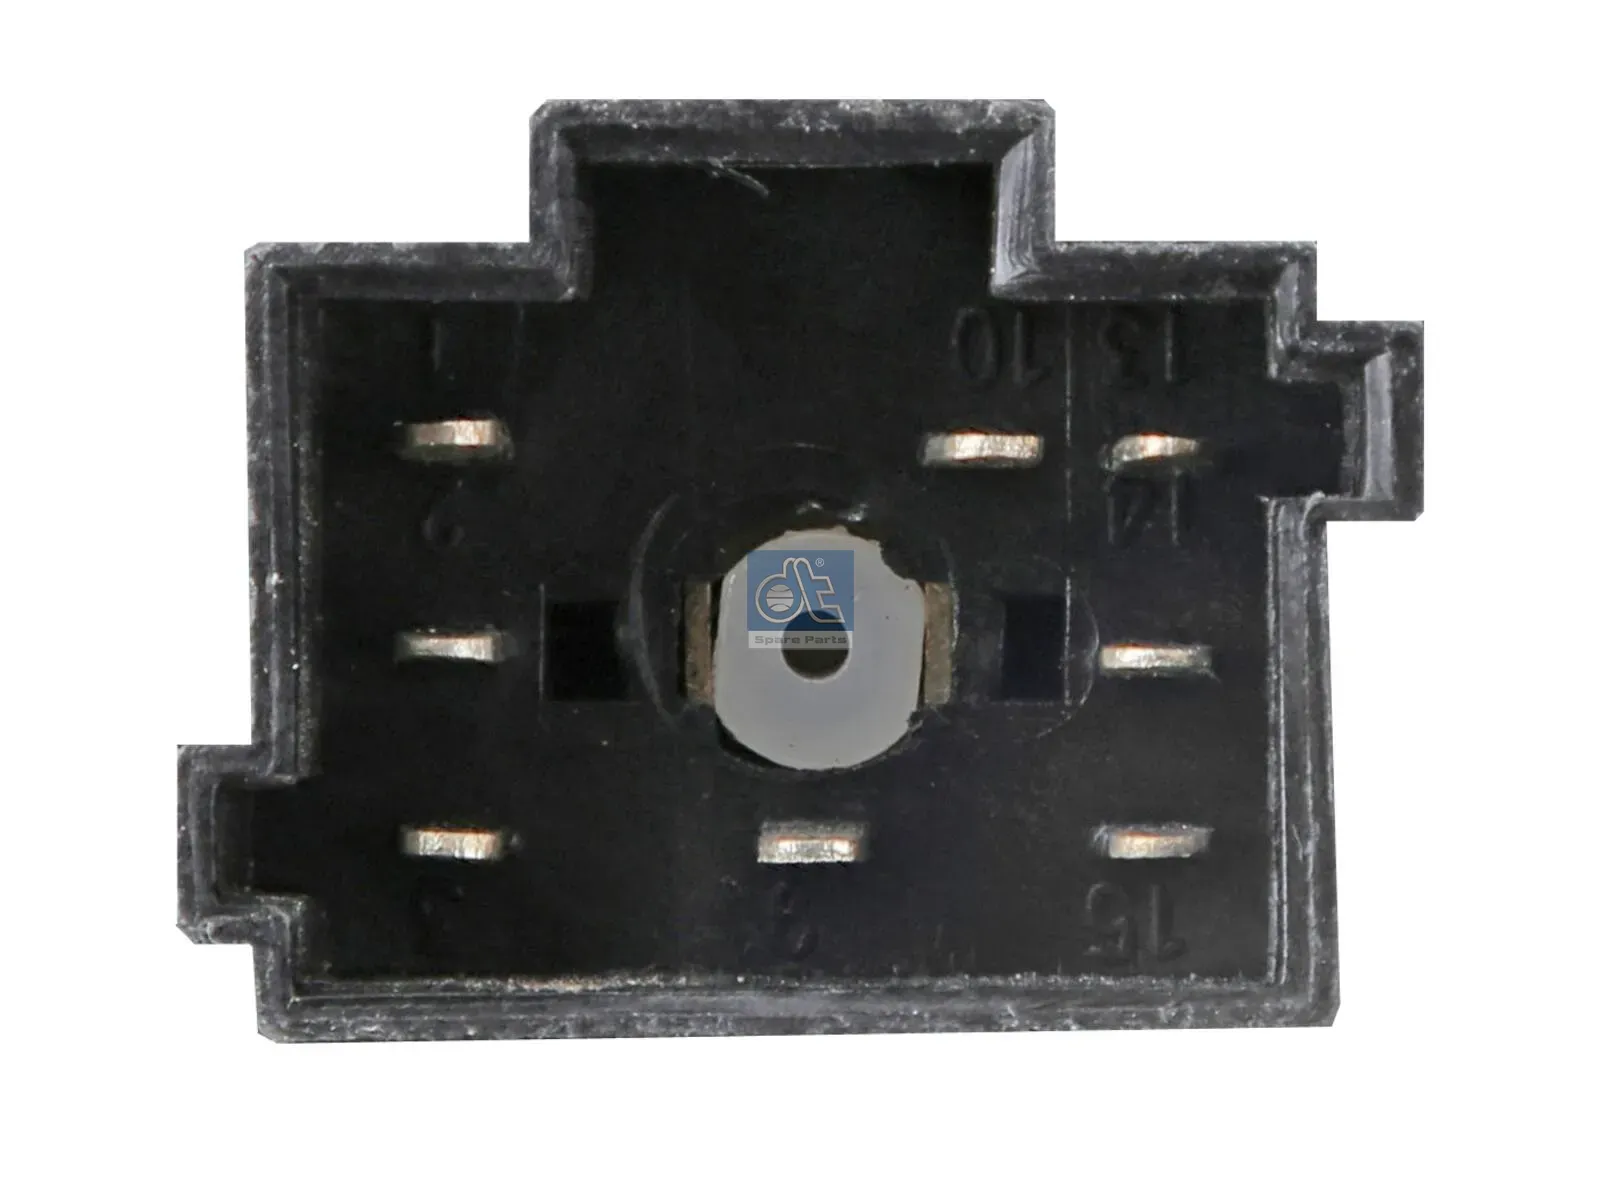 Interruptor de luces, empuñadura giratoria, con bombilla